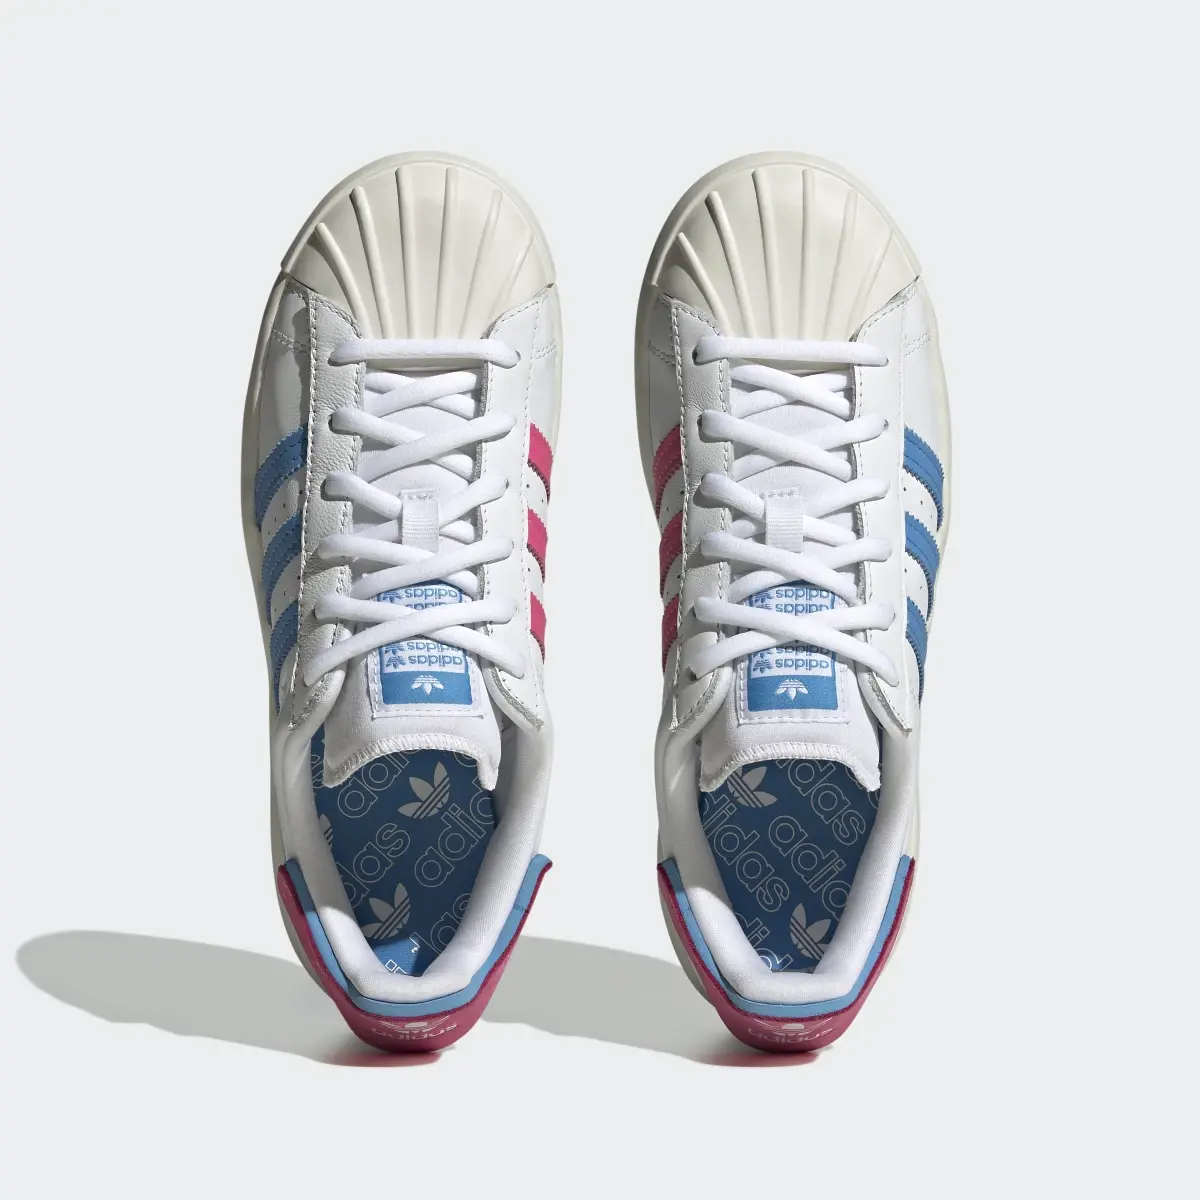 Adidas Superstar Ayoon Ayakkabı. 3